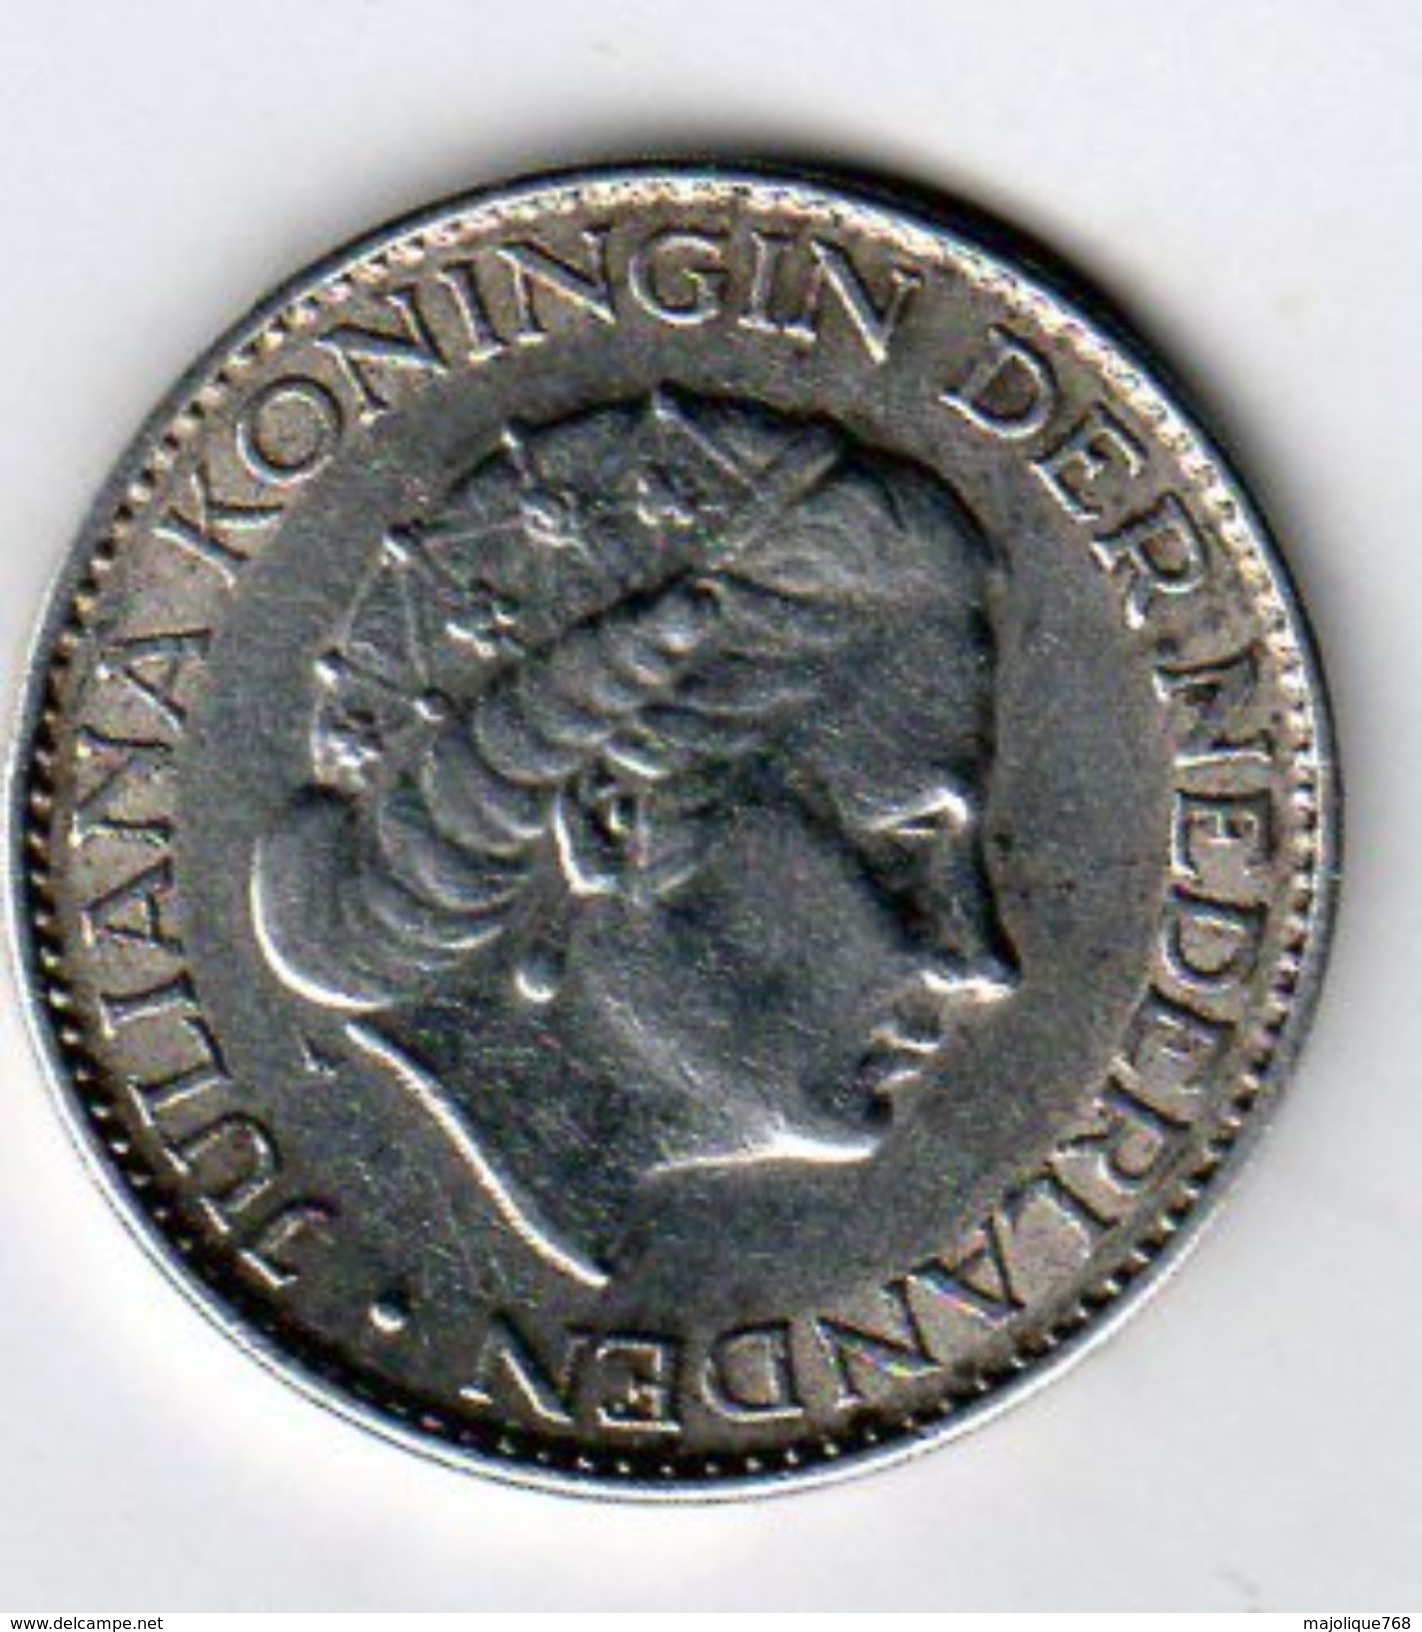 Pièce De Monnaie Du Pays-bas De 1 Gulden Argent 1963 En S U P - - Gold- & Silbermünzen